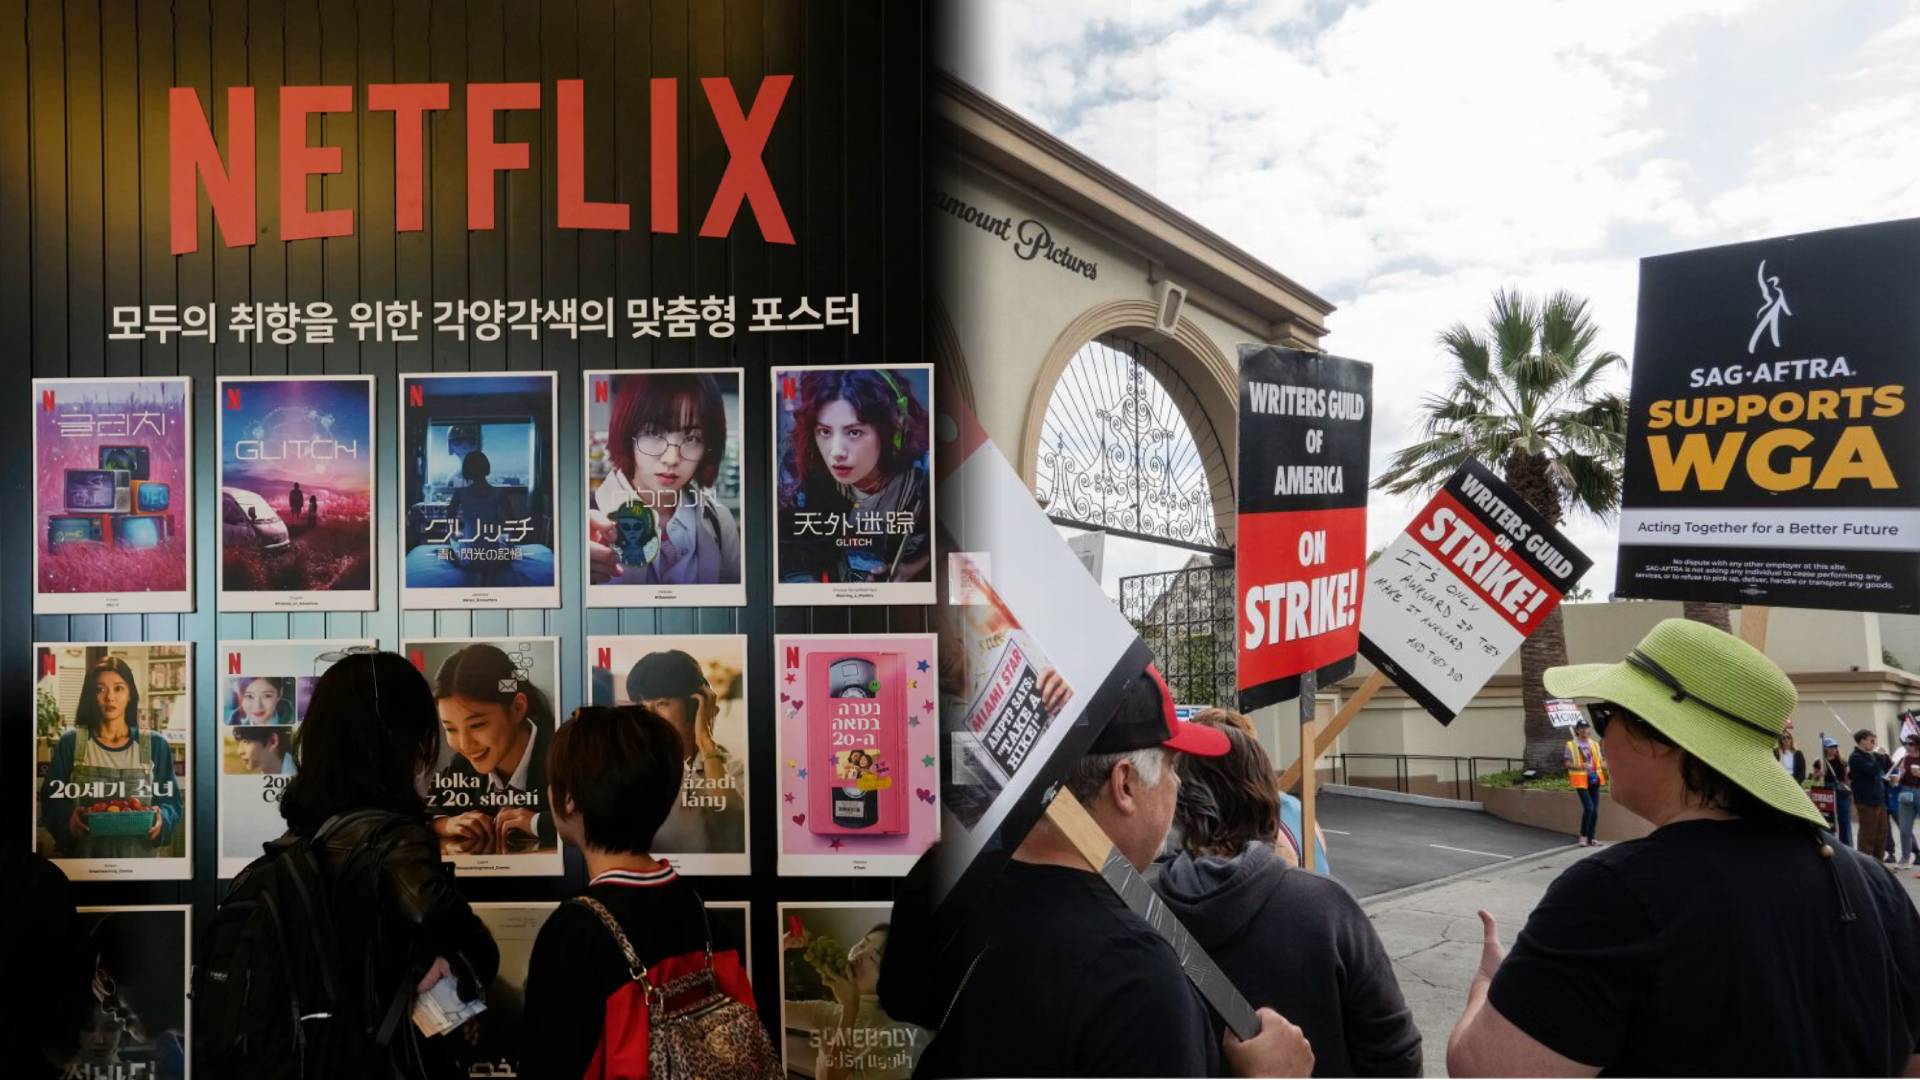 Sindicato de actores coreanos buscan mejores salarios en k-dramas de Netflix